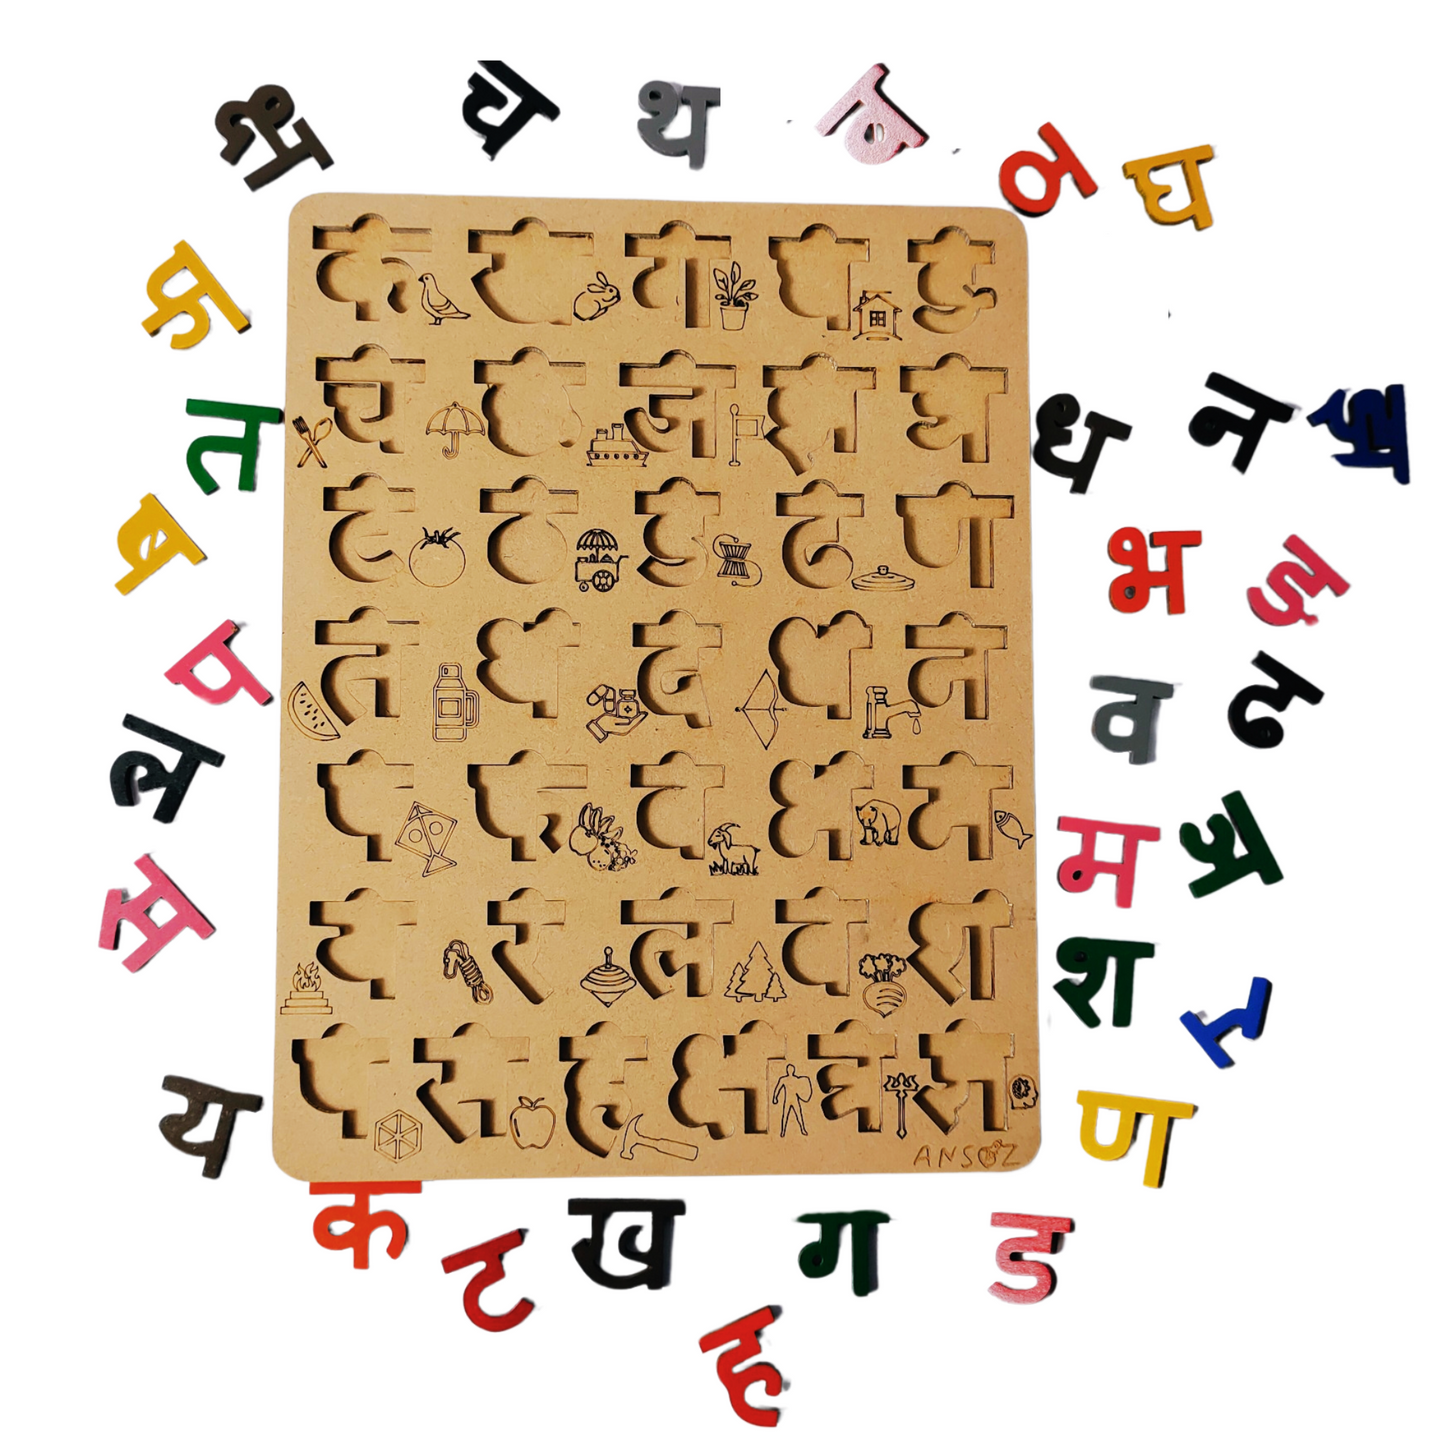 Wooden Hindi Varnamala Alphabets Board